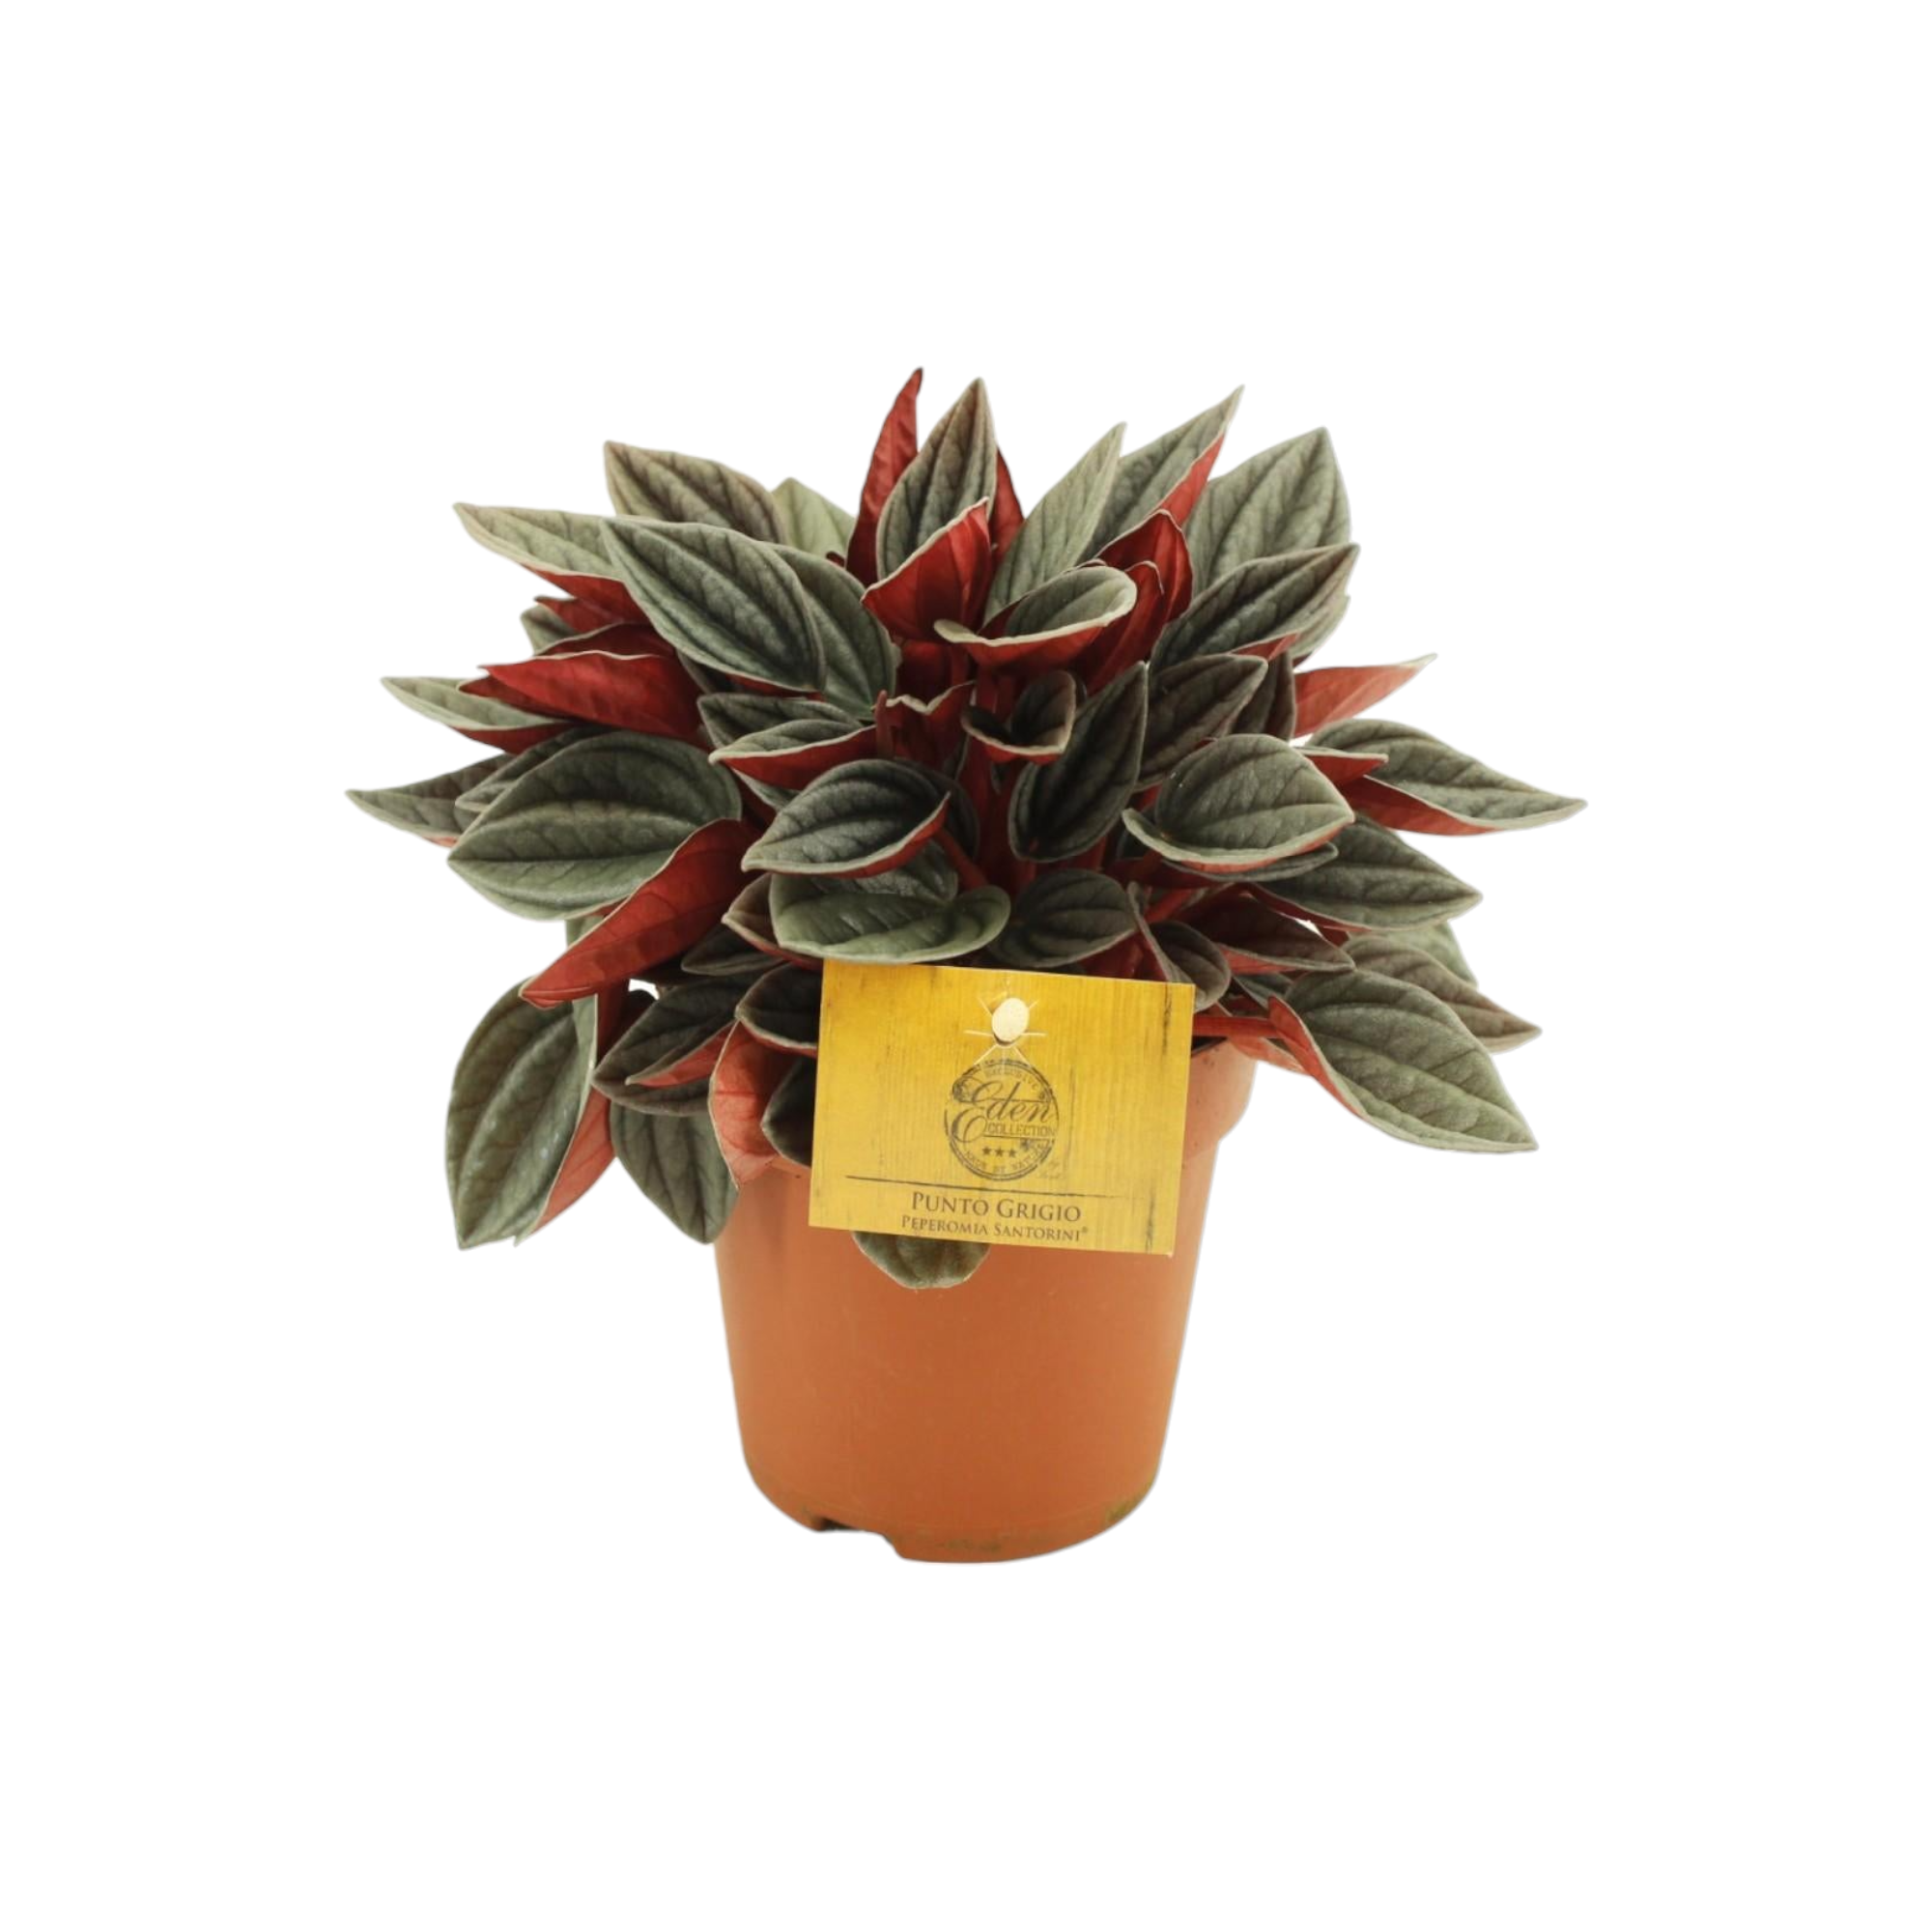 Plante d'intérieur - peperomia santorini 20.0cm